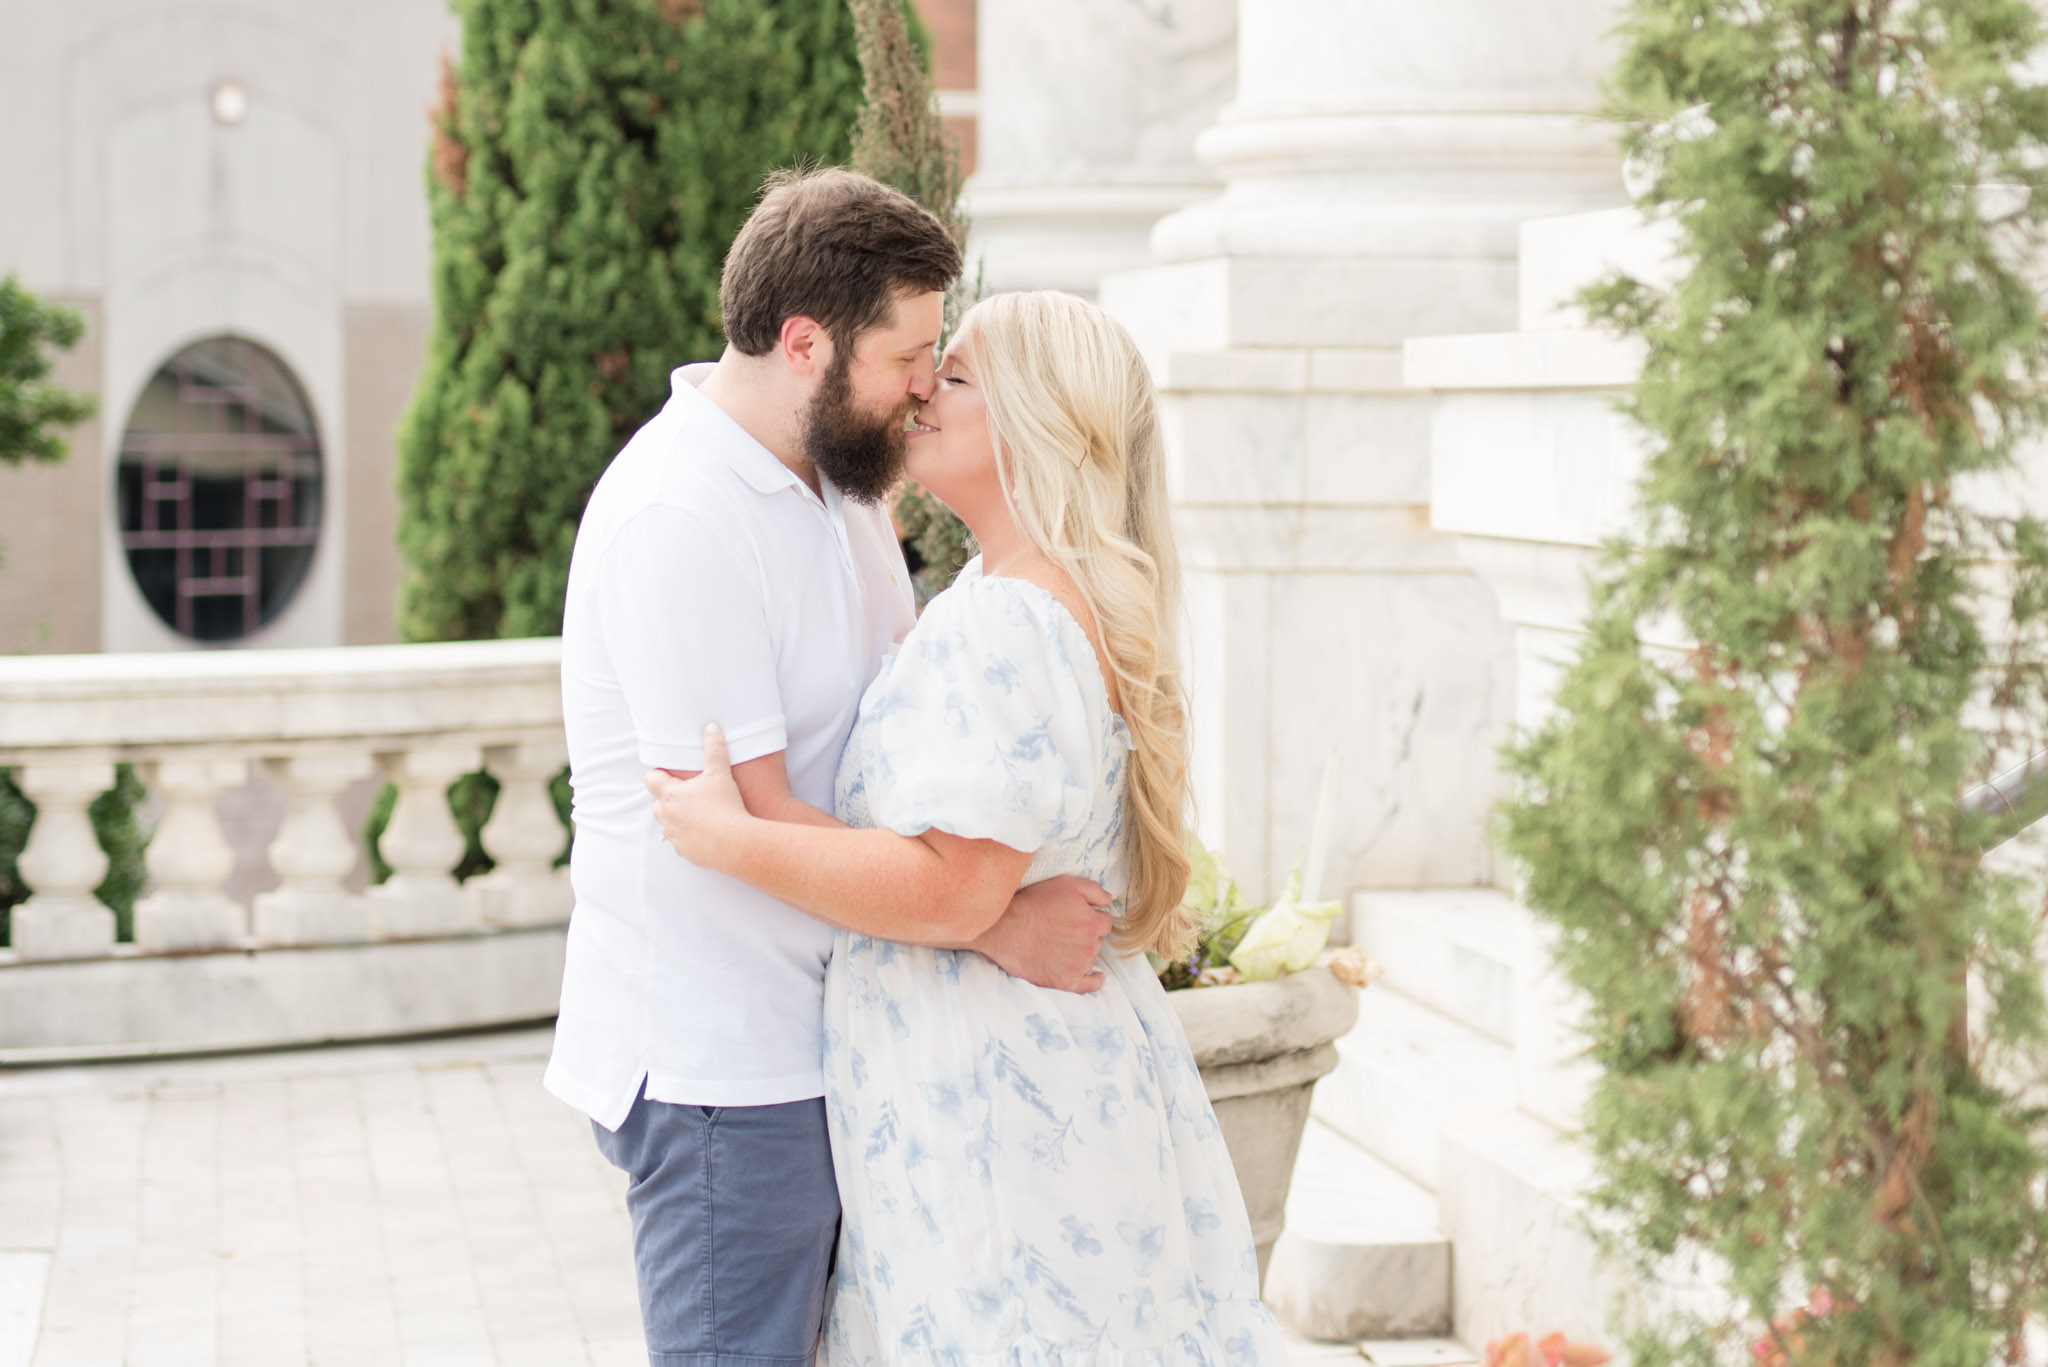 Husband and wife kiss on terrace.